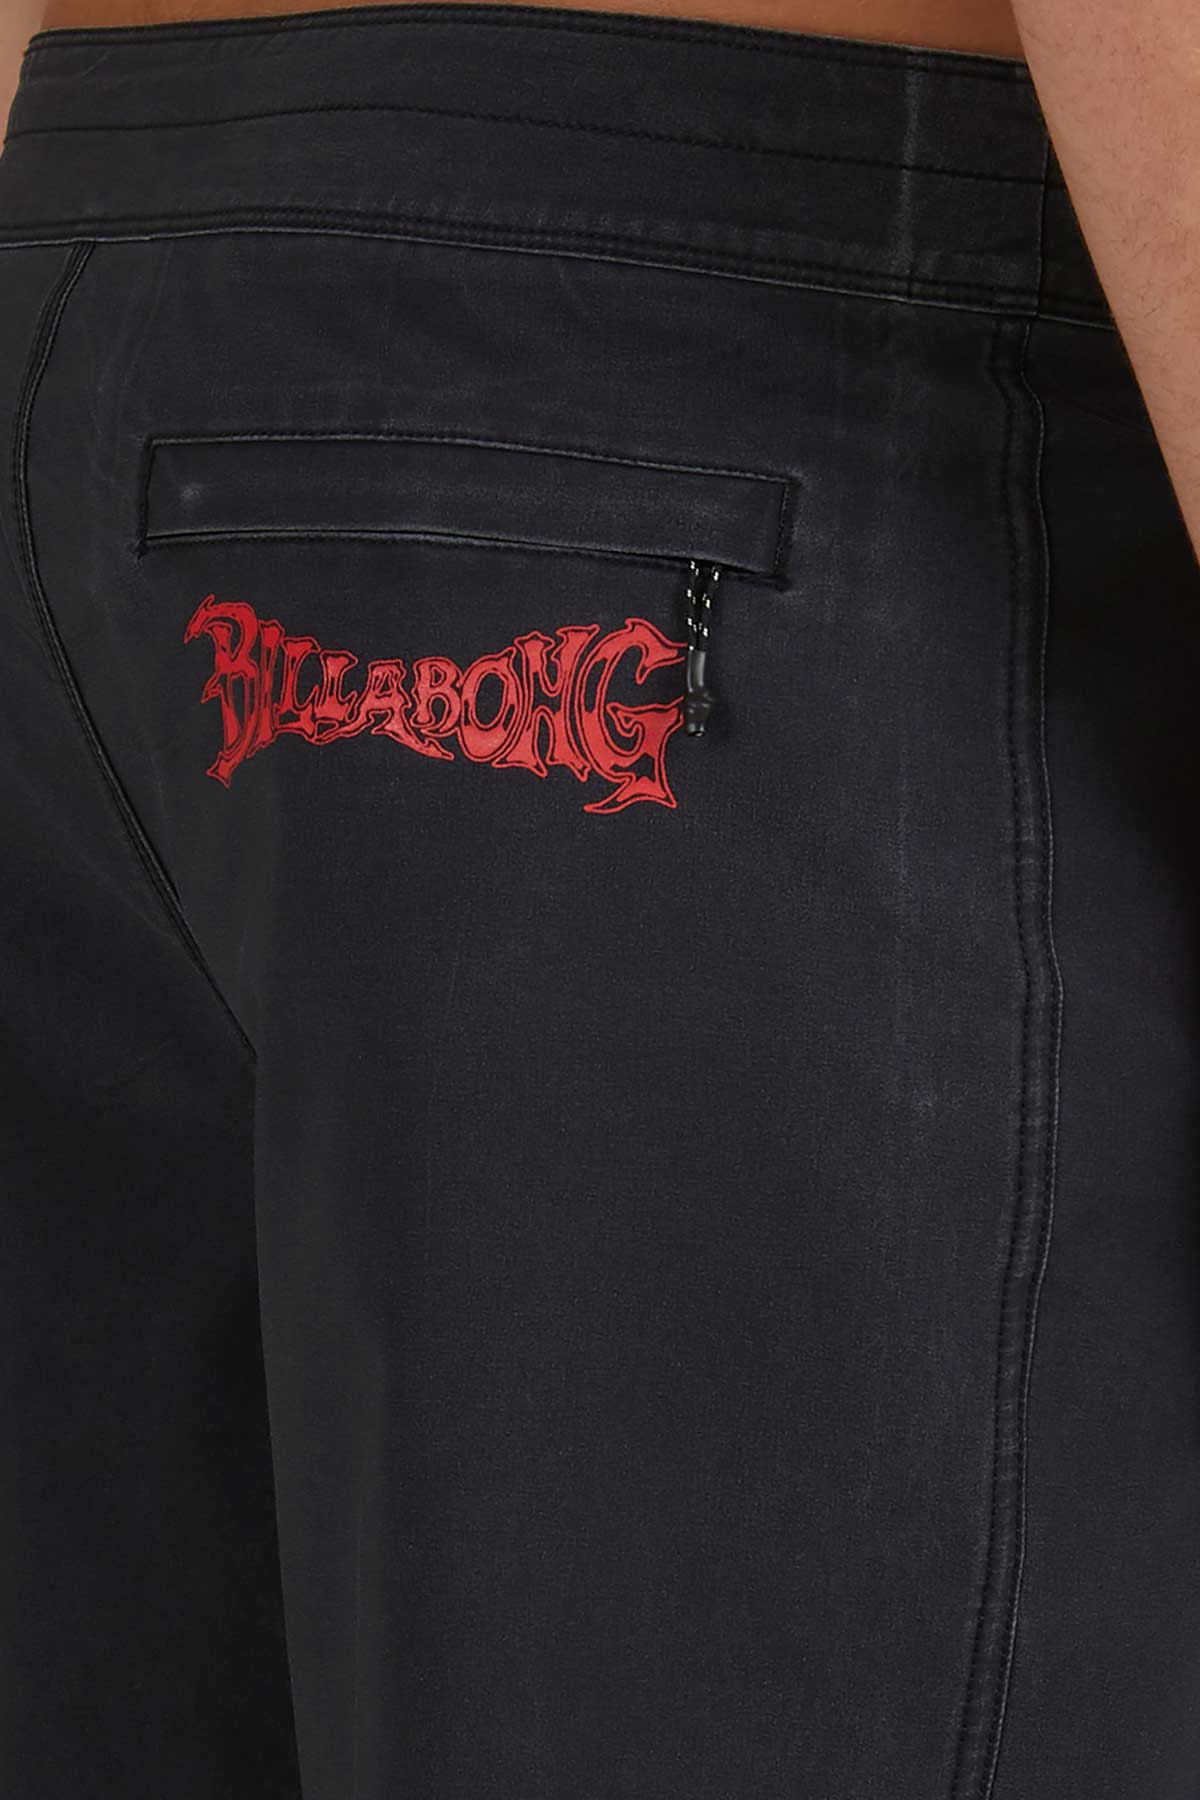 Billabong Bong Core Pro Black, back pocket with zip opening.